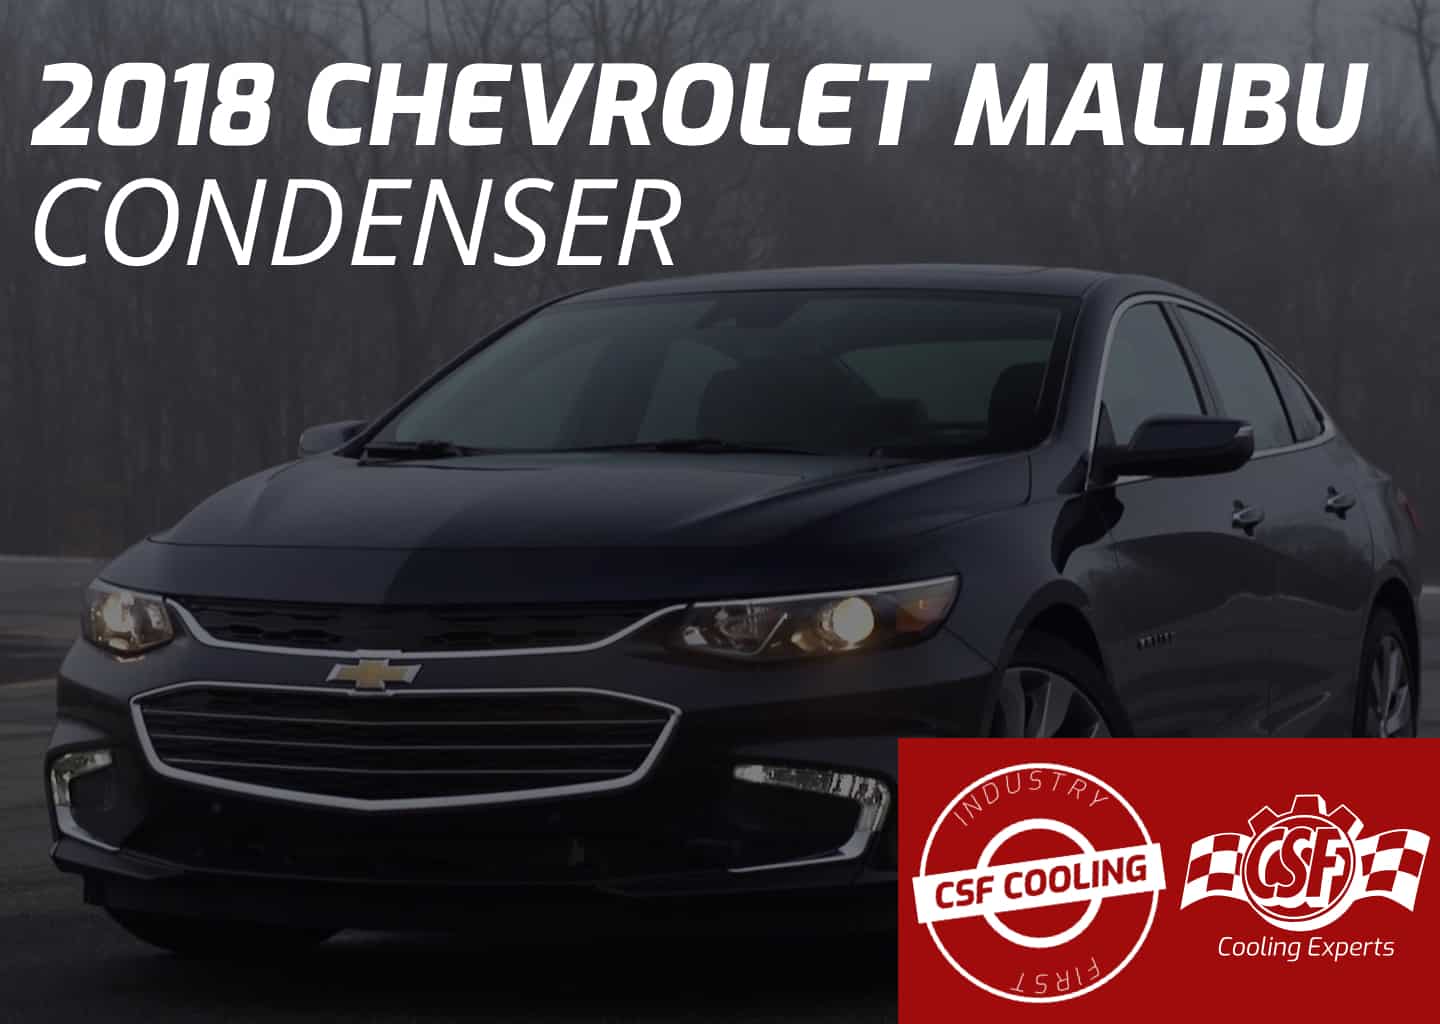 2018 Chevrolet Malibu Condenser